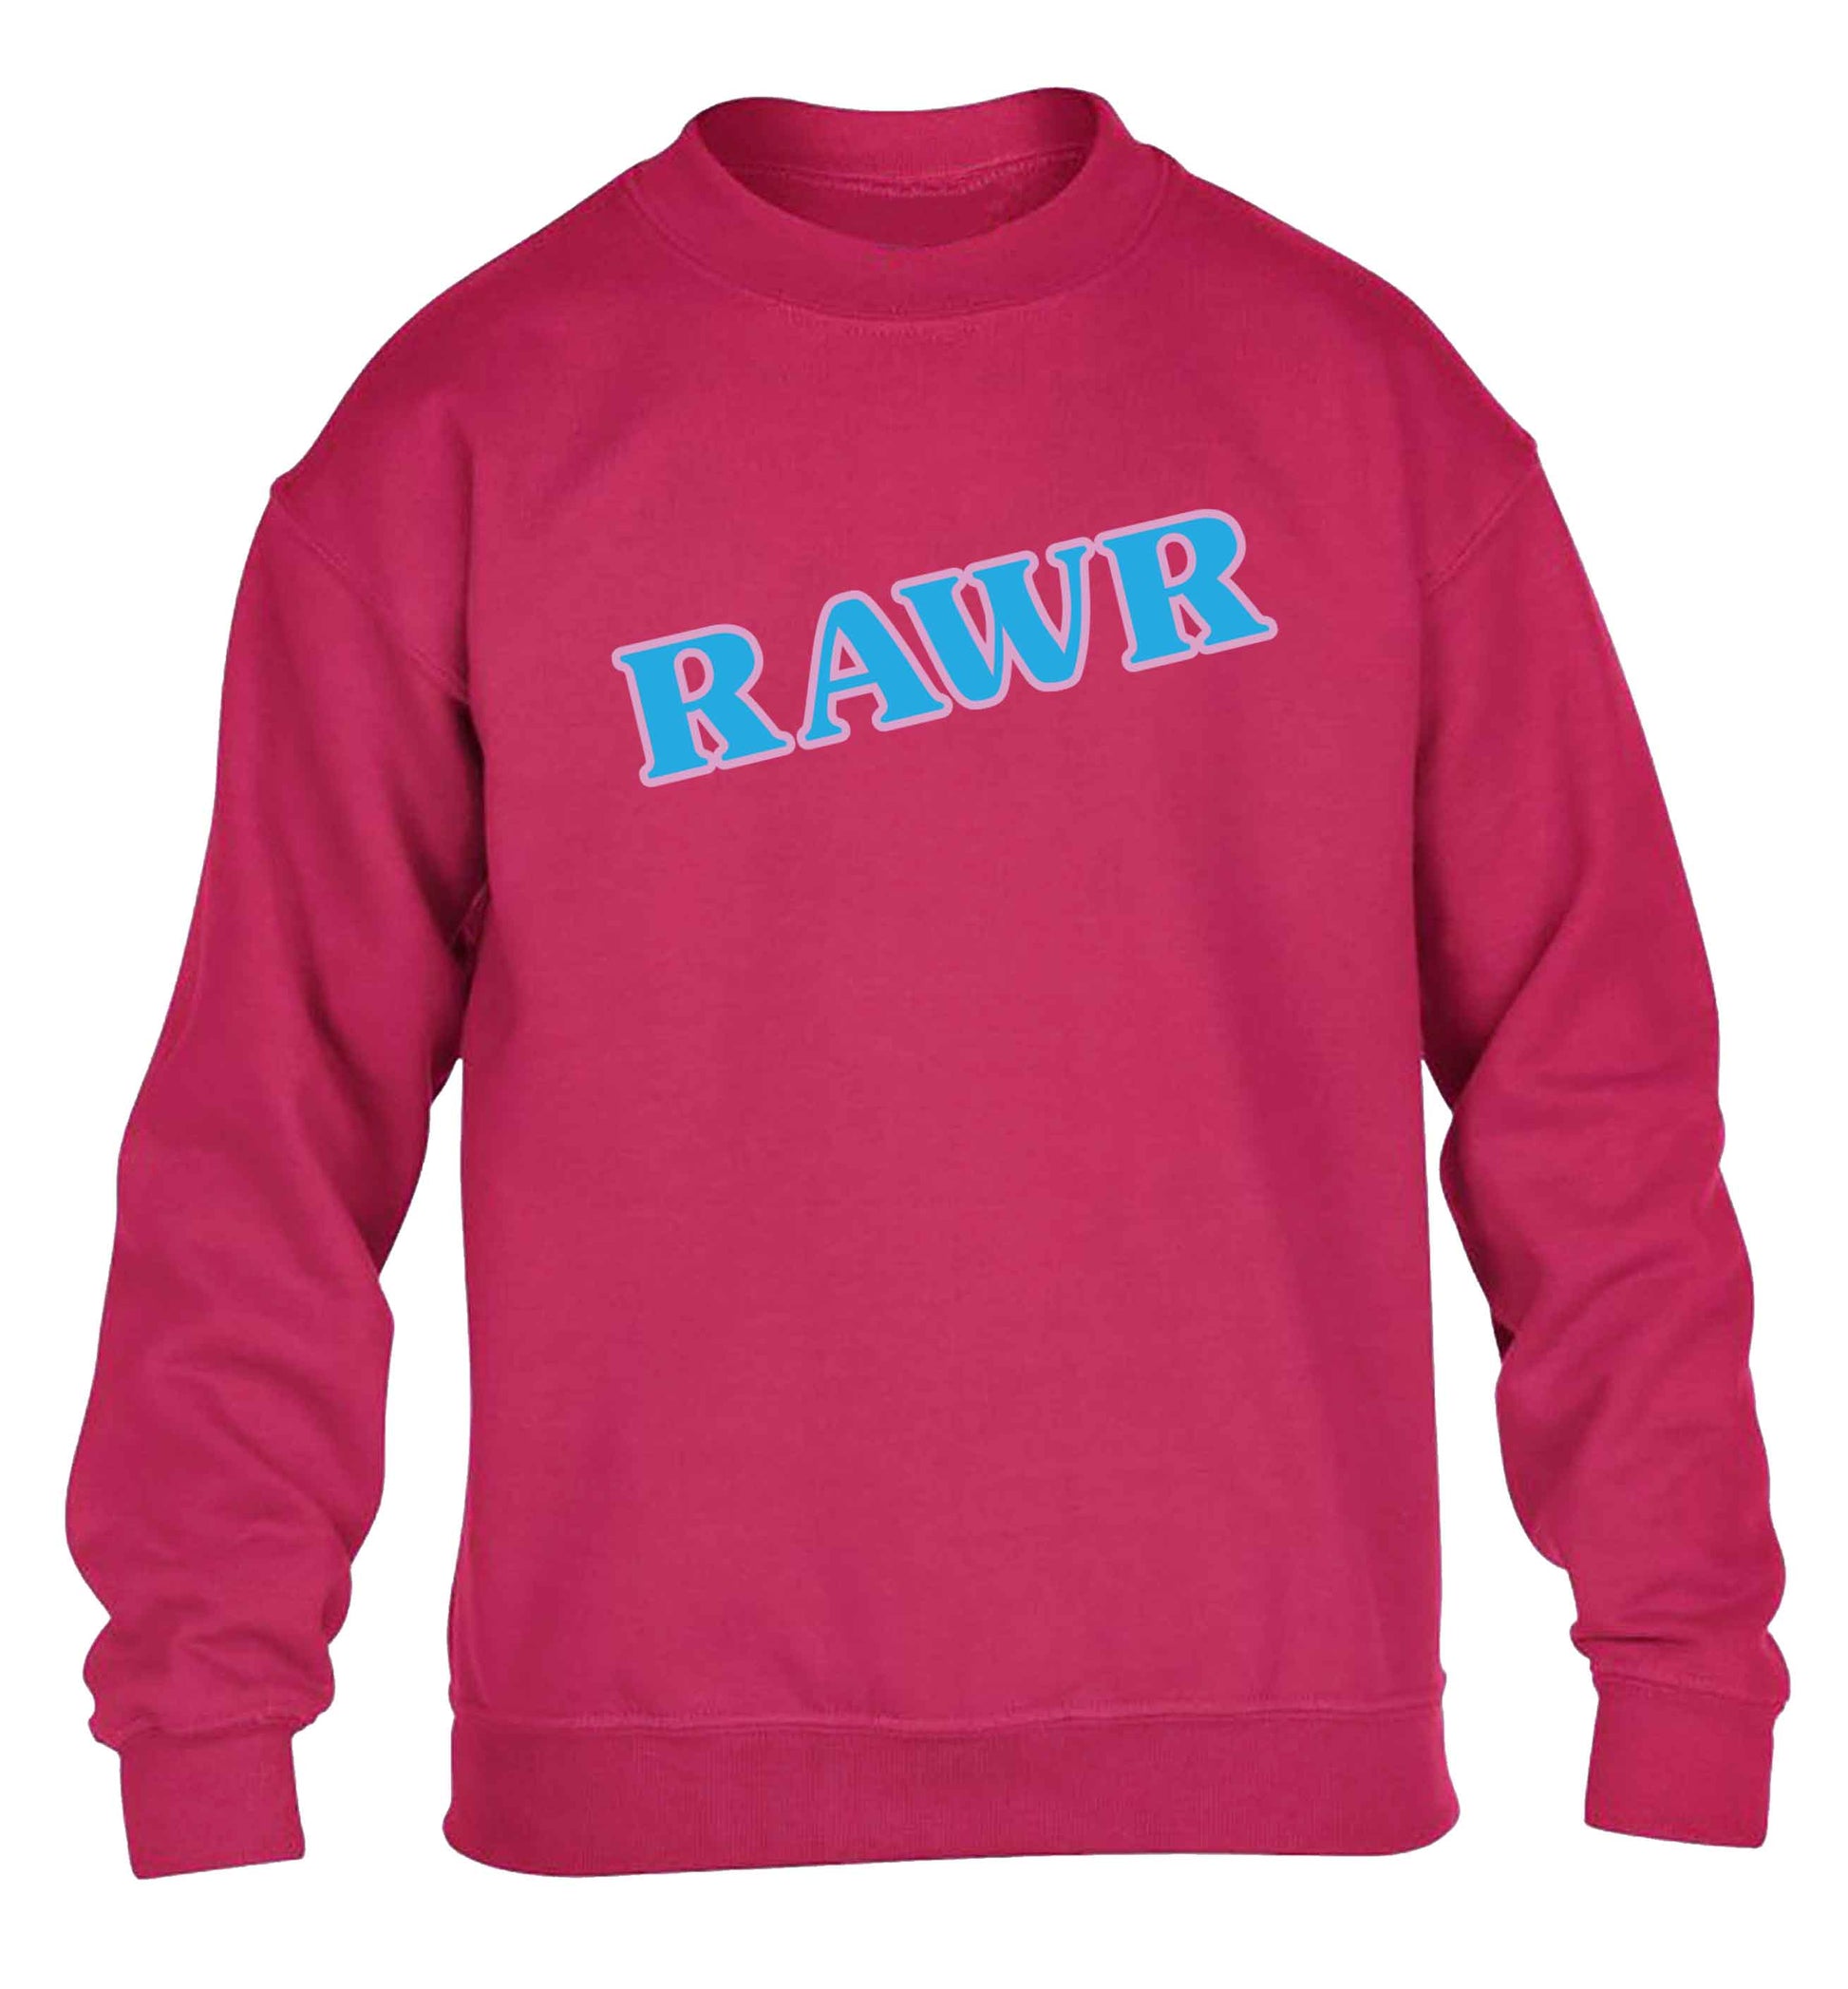 Rawr children's pink sweater 12-13 Years